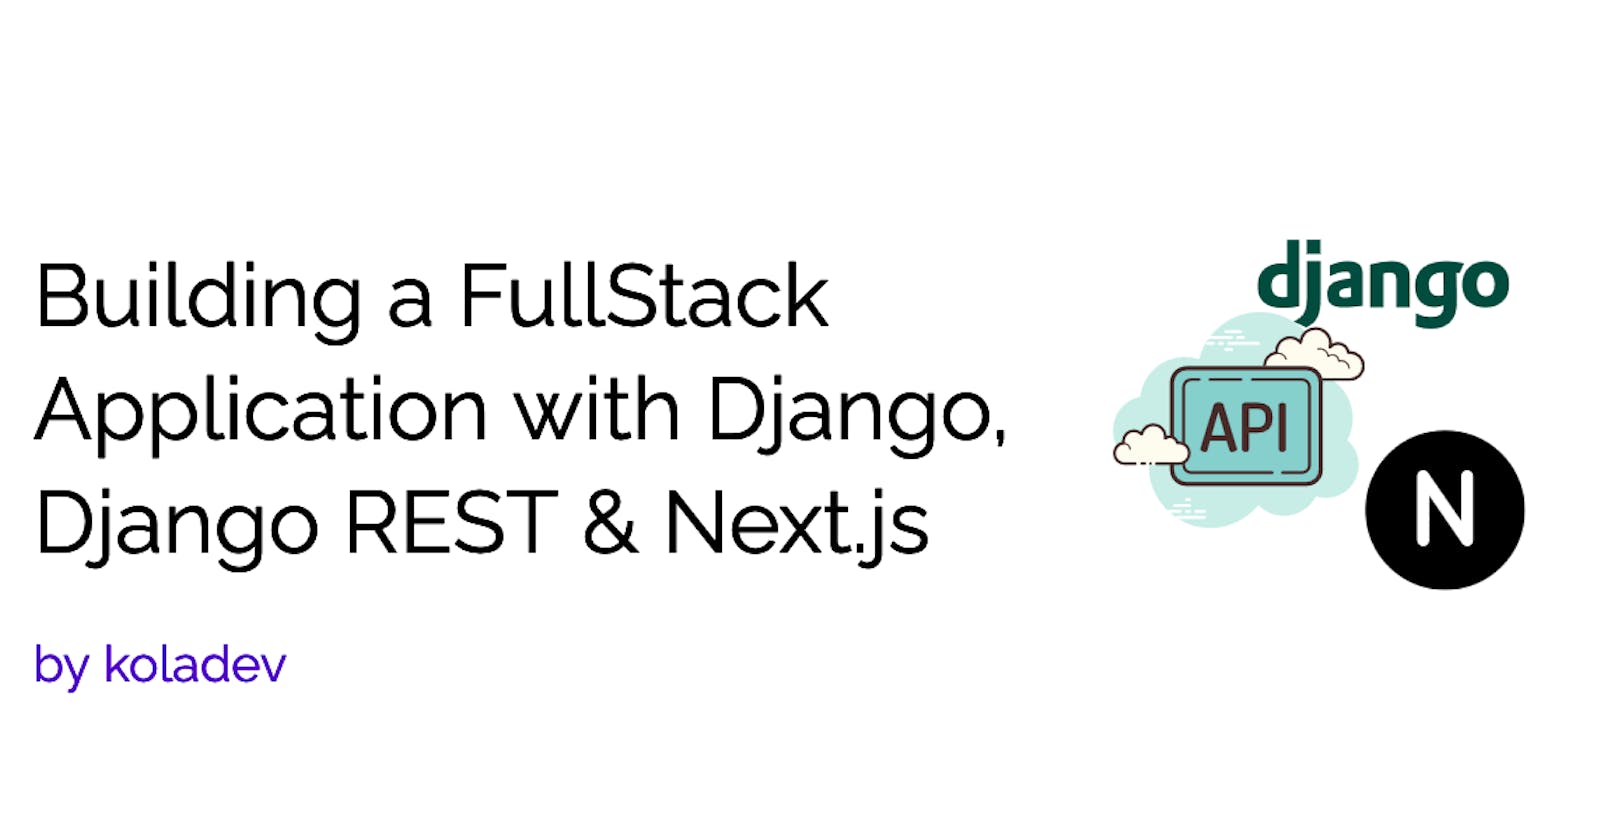 Building a FullStack Application with Django, Django REST & Next.js